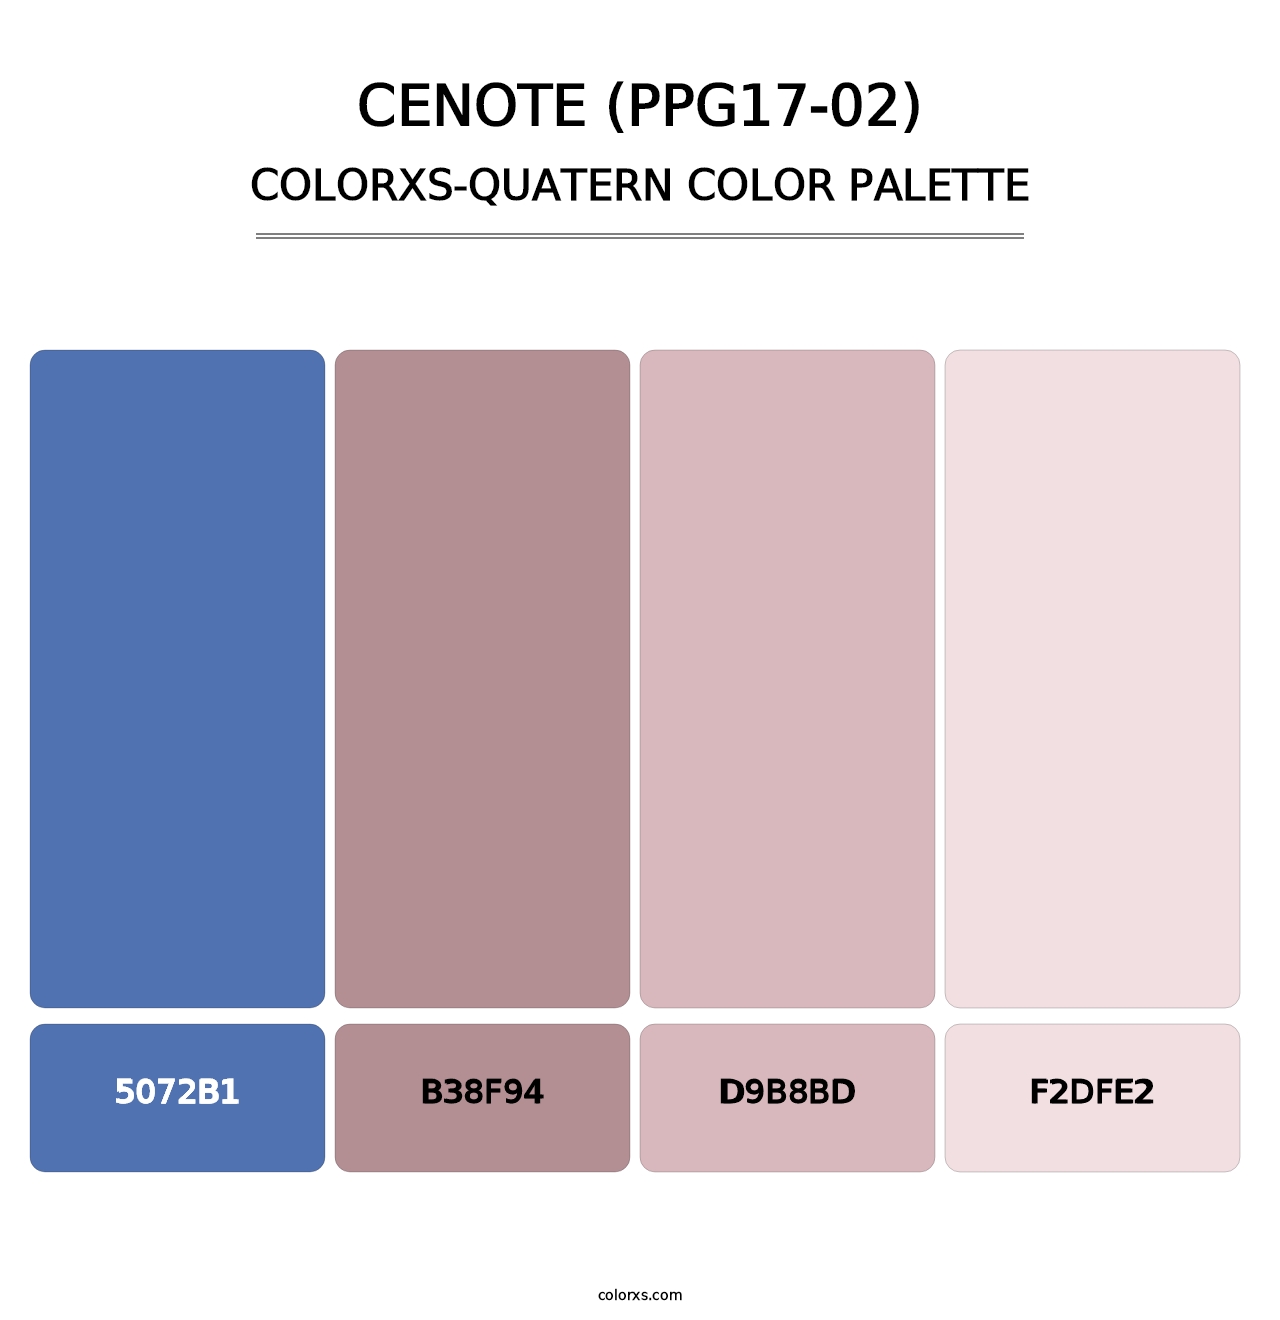 Cenote (PPG17-02) - Colorxs Quatern Palette